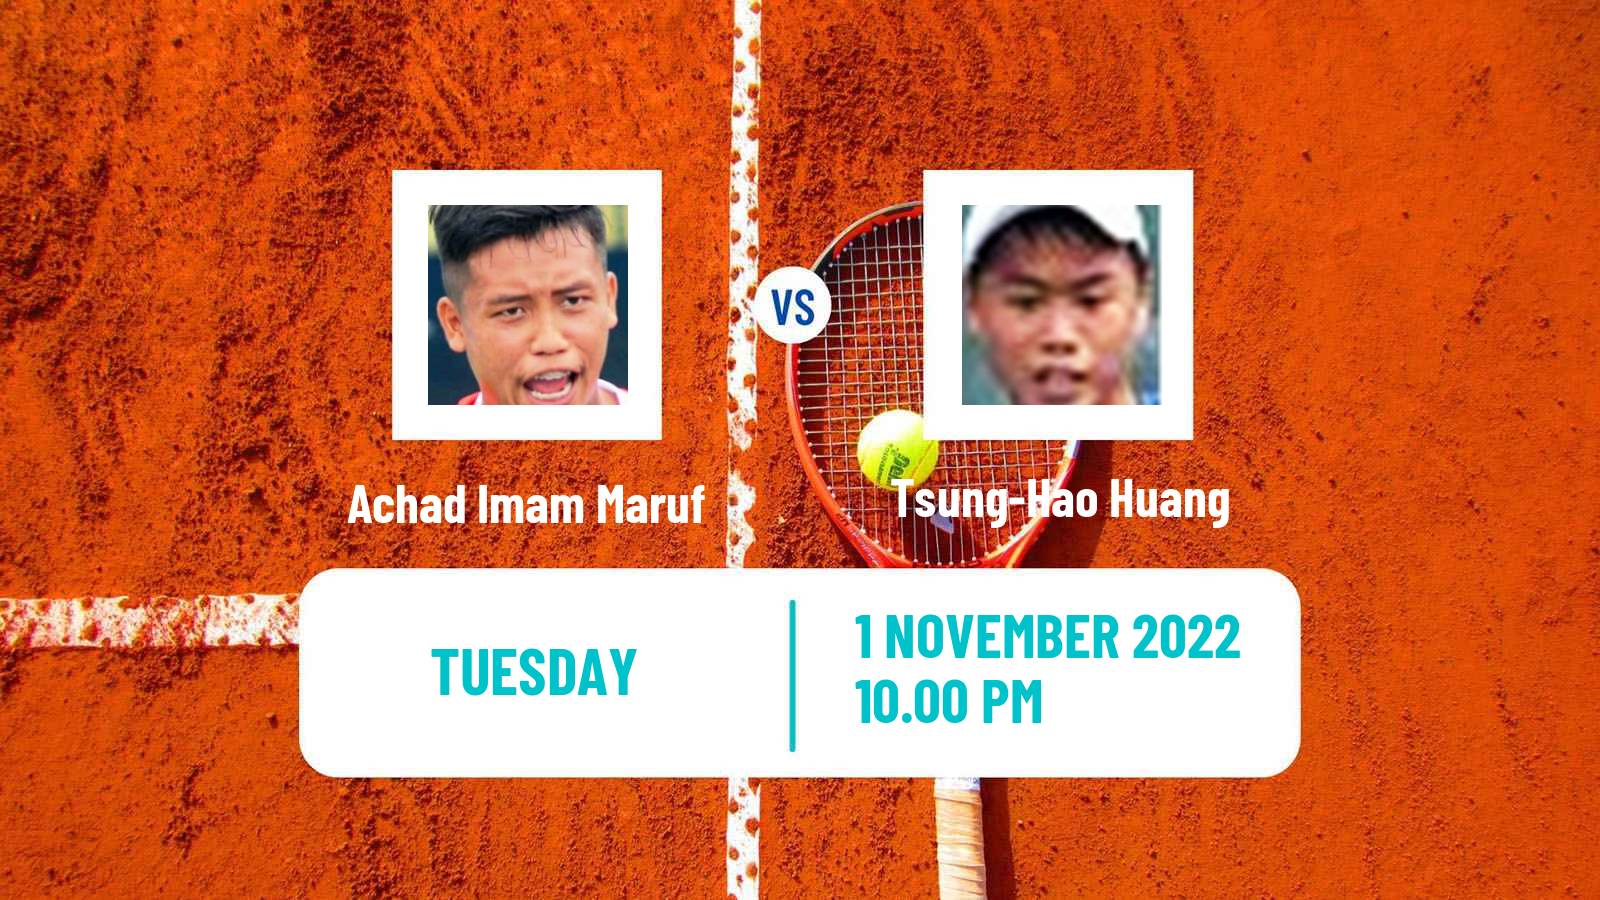 Tennis ITF Tournaments Achad Imam Maruf - Tsung-Hao Huang